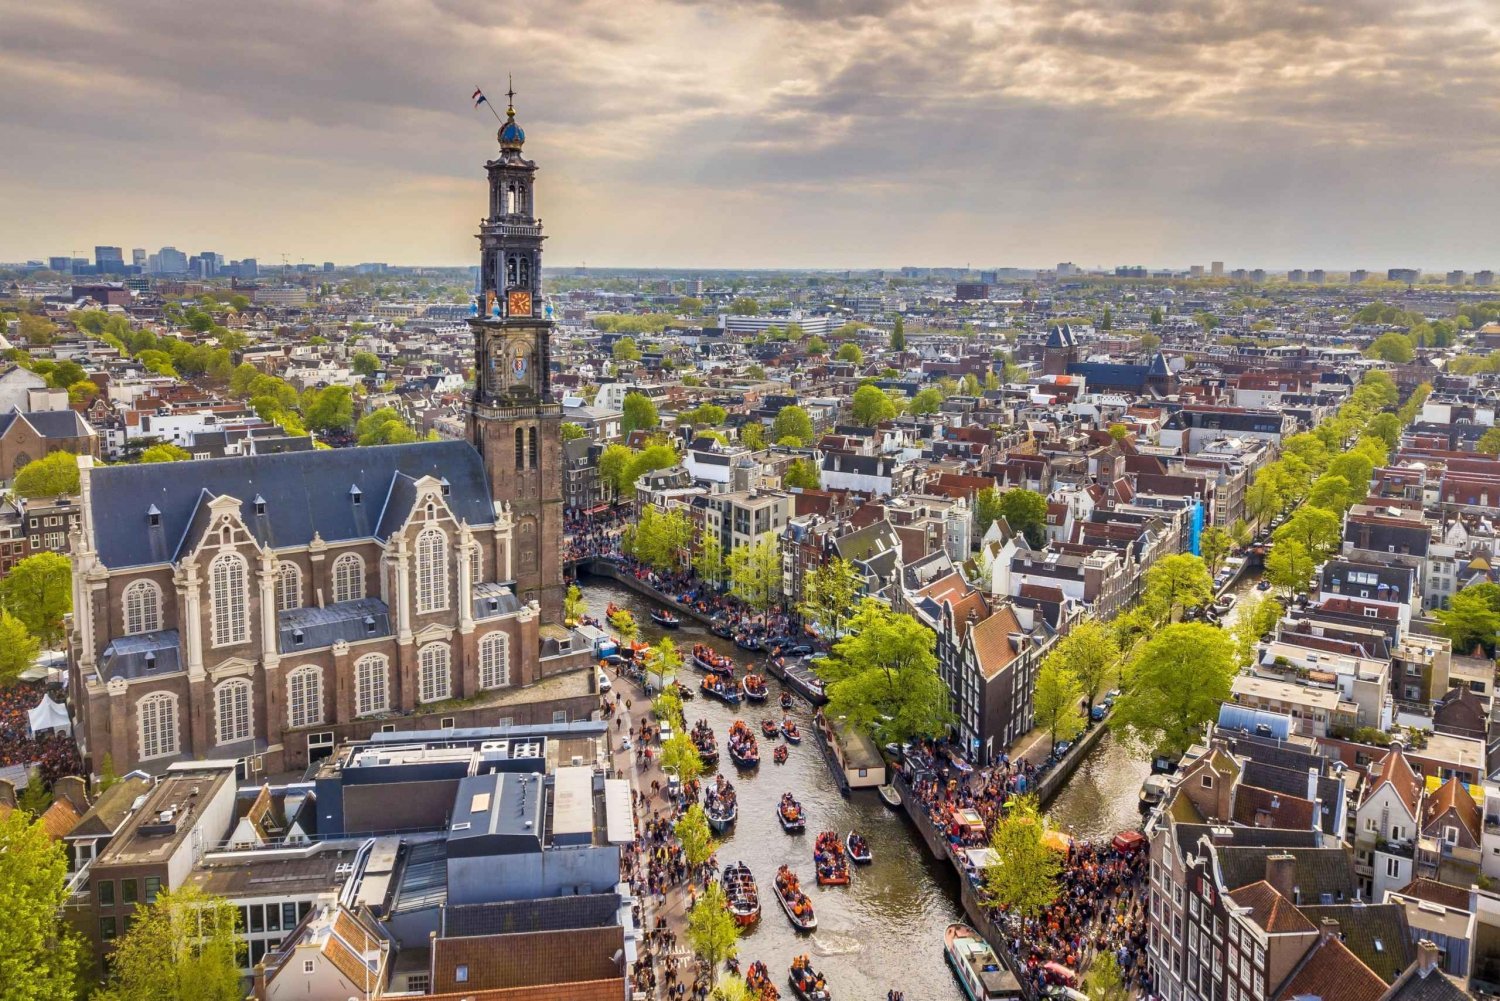 Second World War: The Liberation of Amsterdam